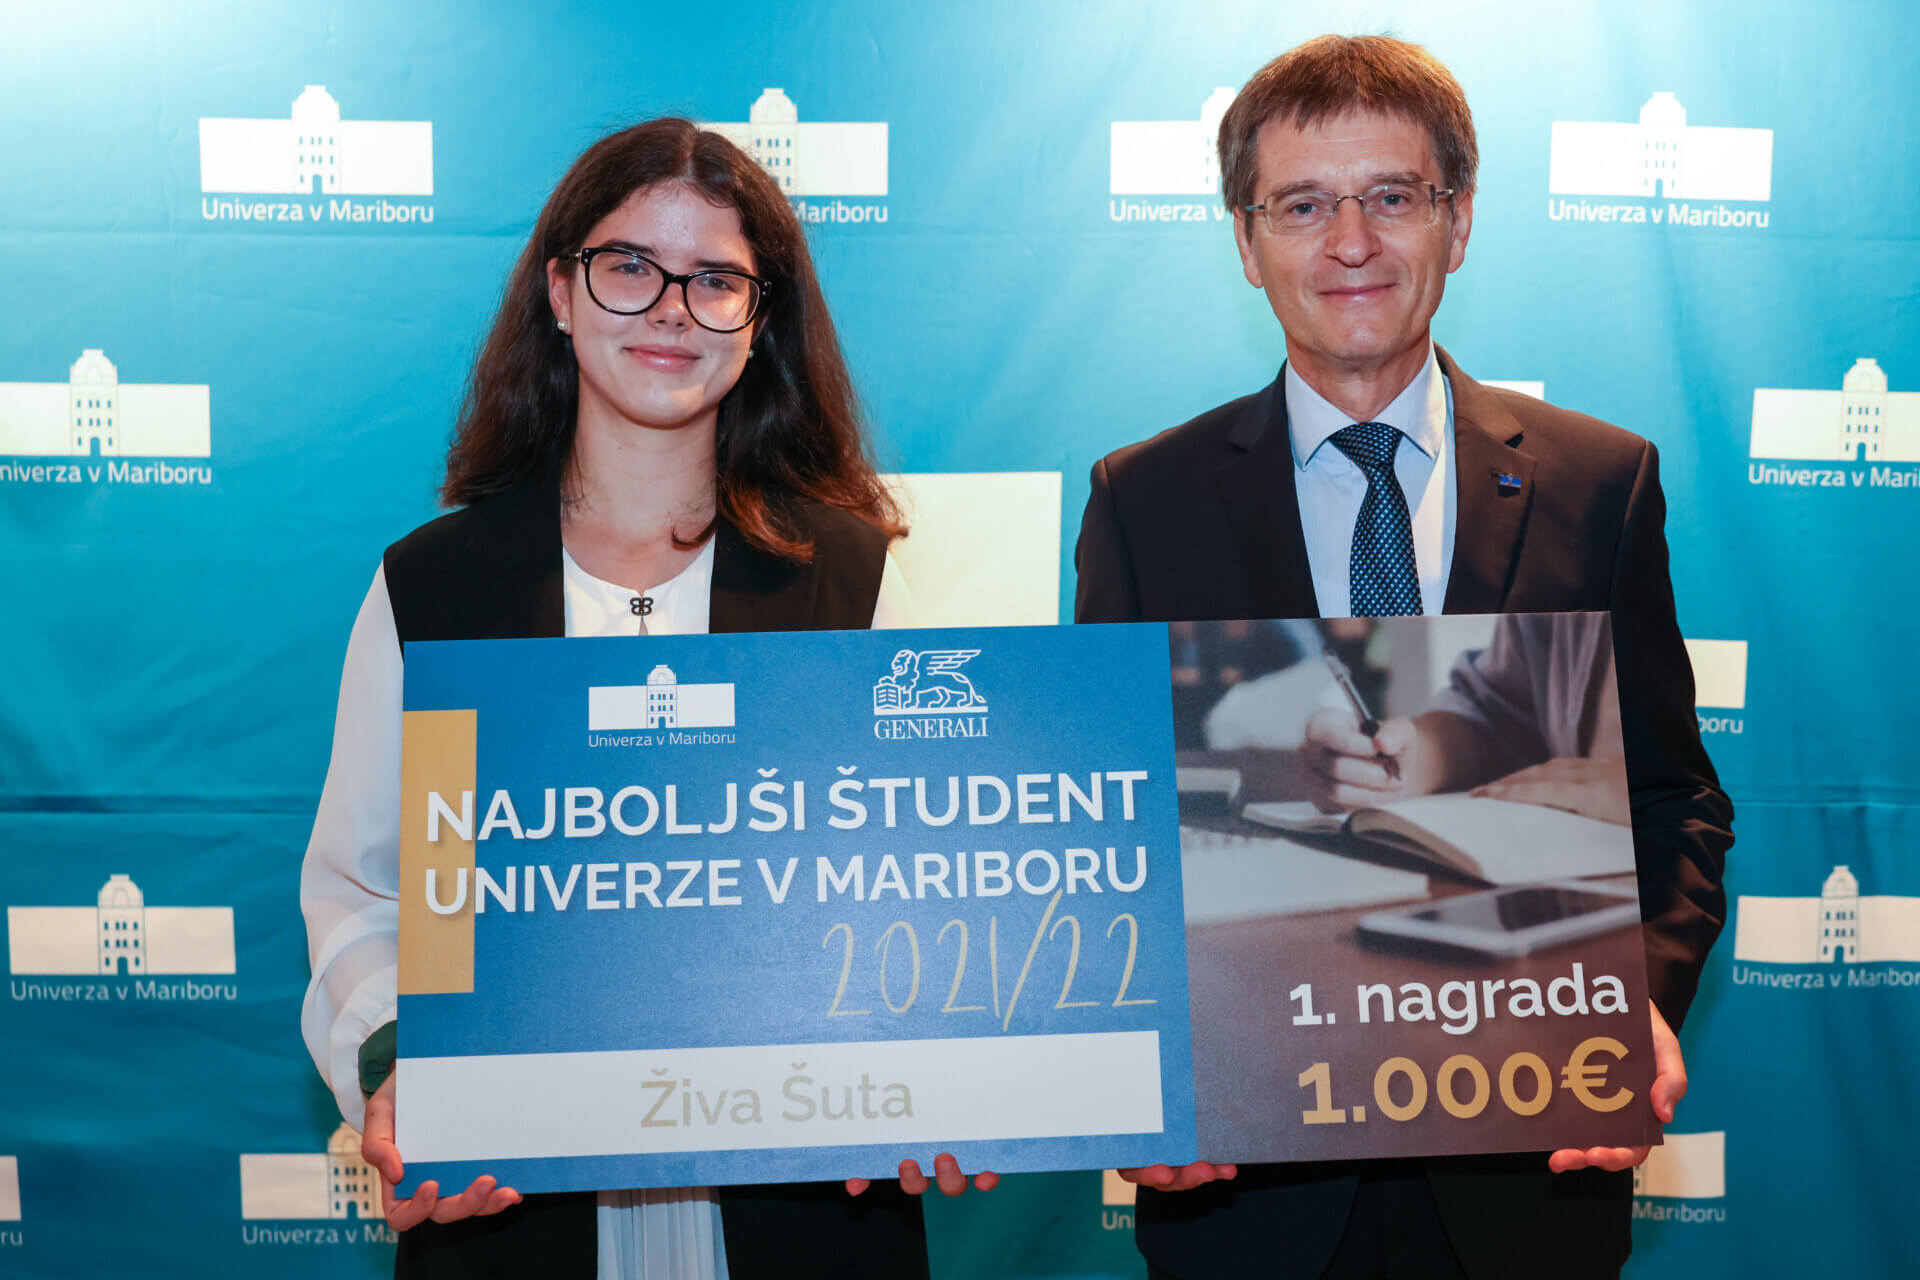 Najboljša študentka Univerze v Mariboru je Živa Šuta